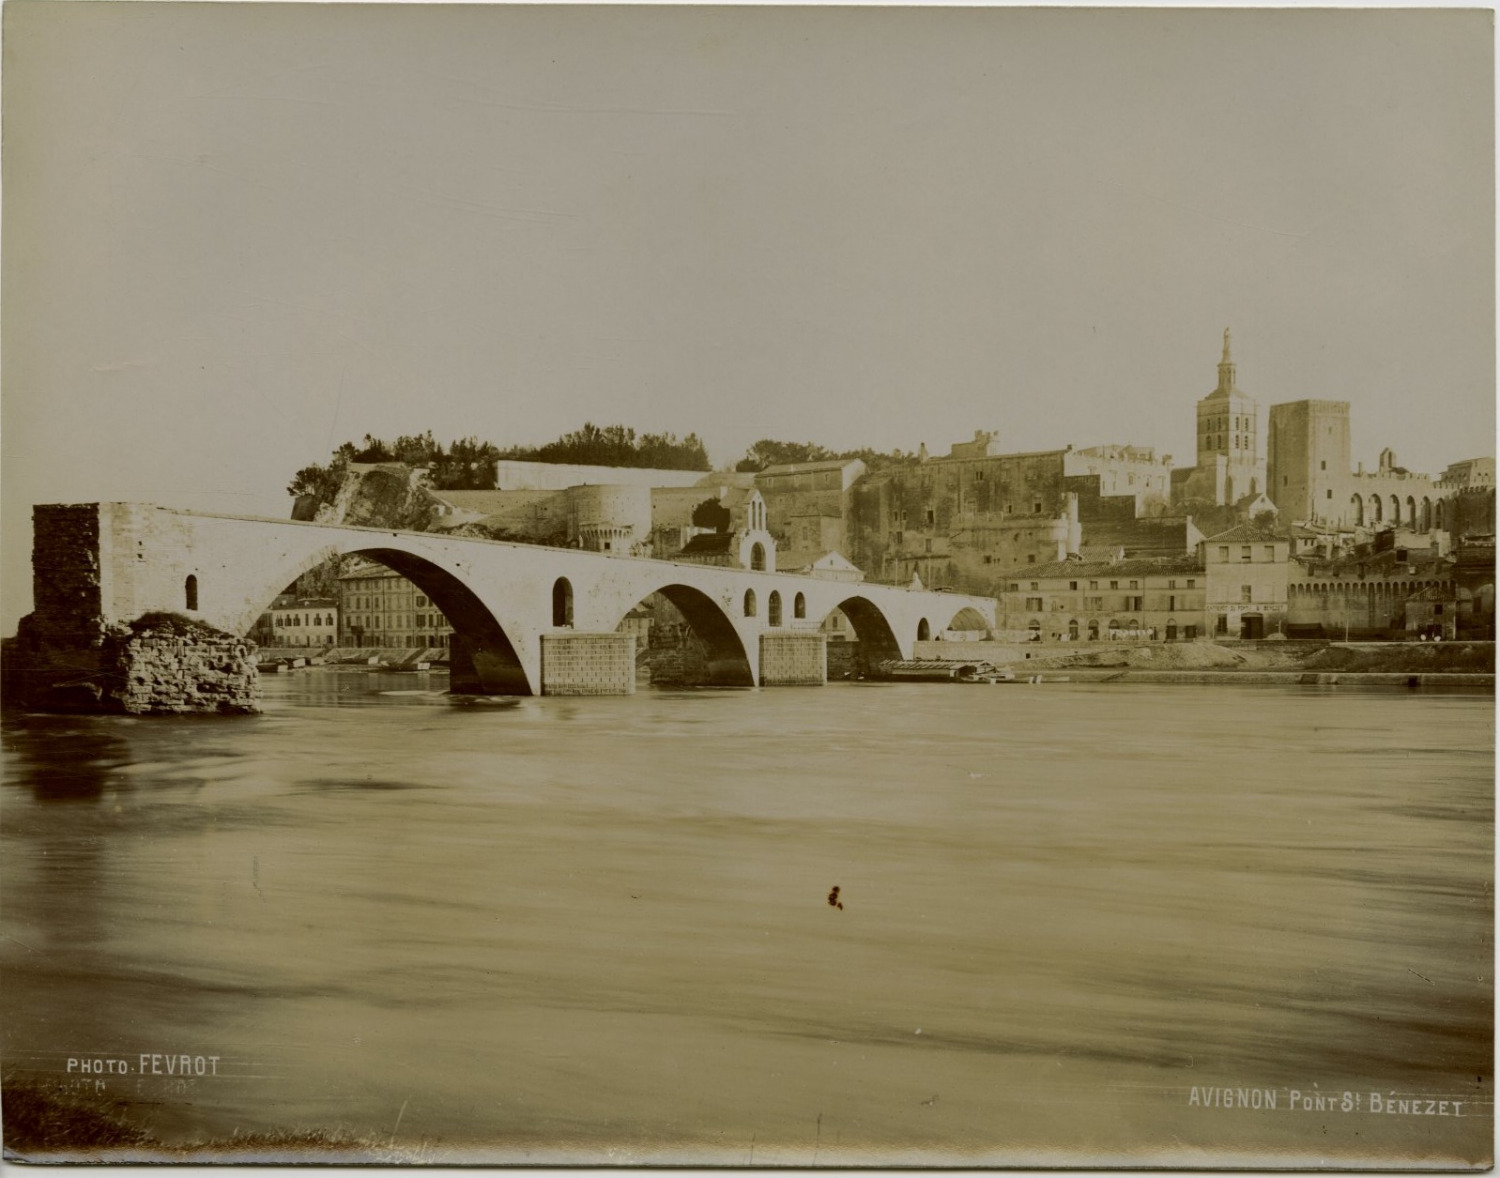 Fevrot, France, Avignon, Pont St. Bénezet vintage print, France photomechanical